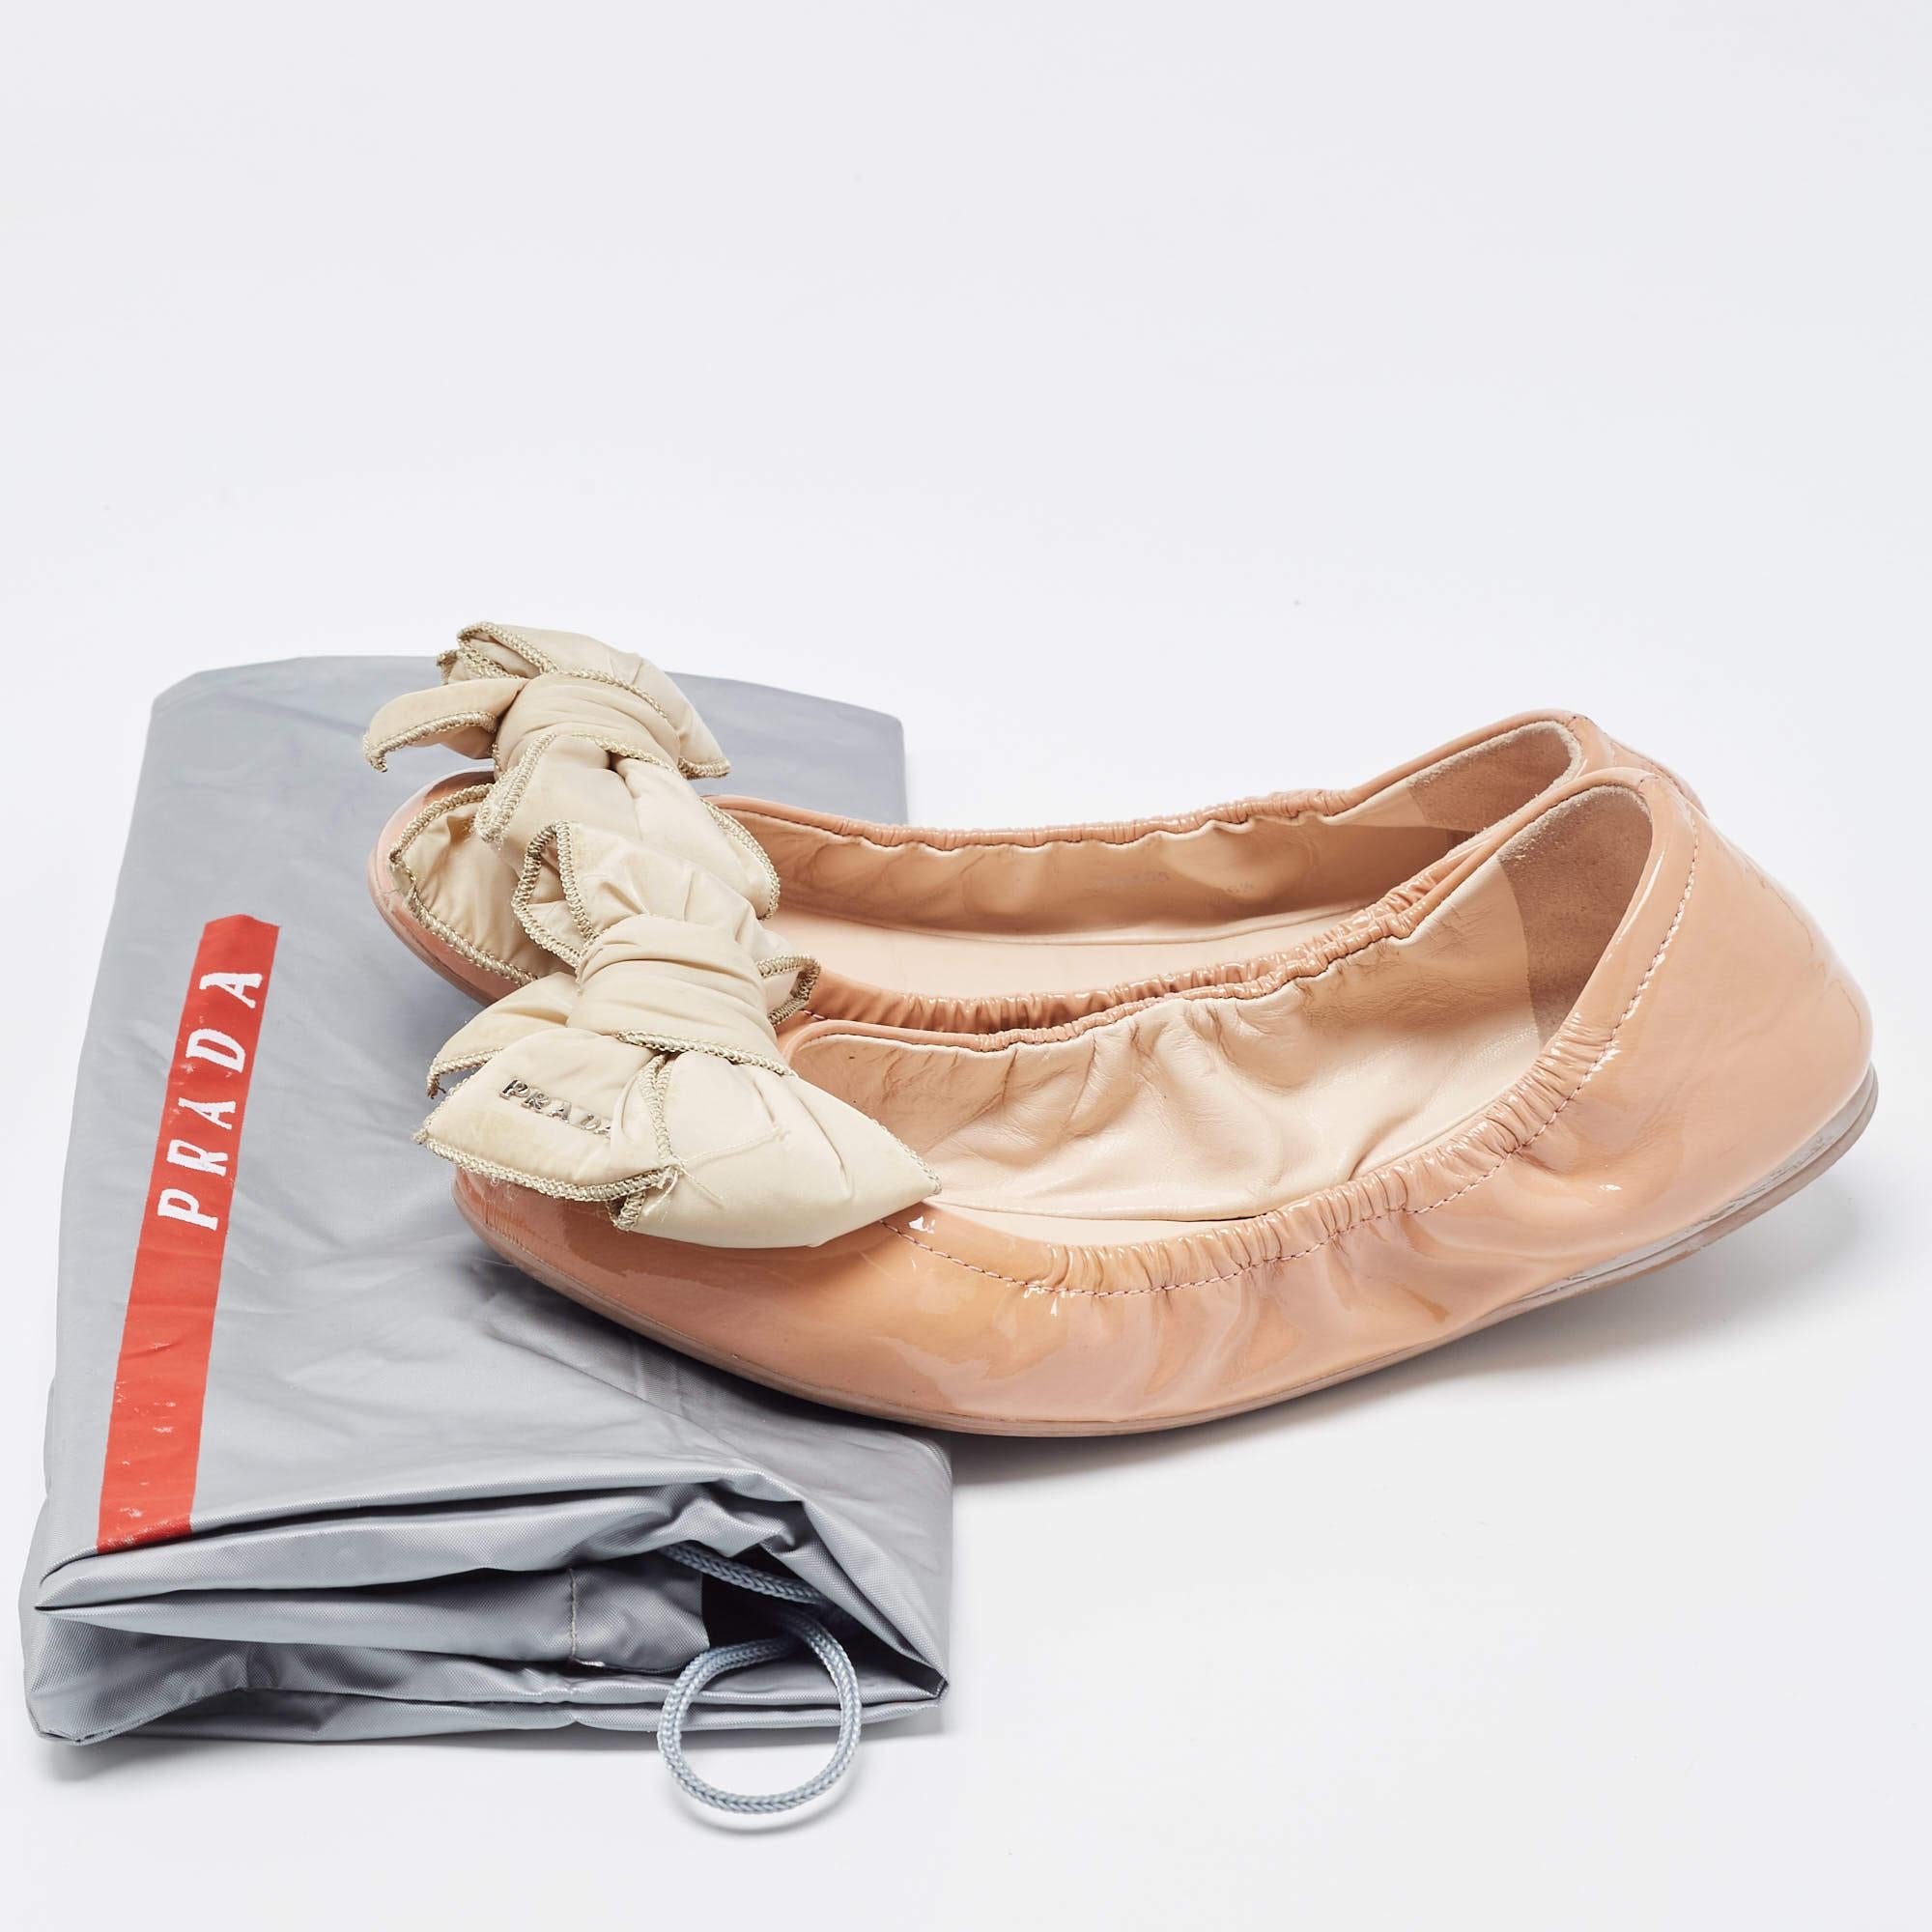 Prada Beige Patent Leather Bow Scrunch Ballet Flats Size 36.5 3